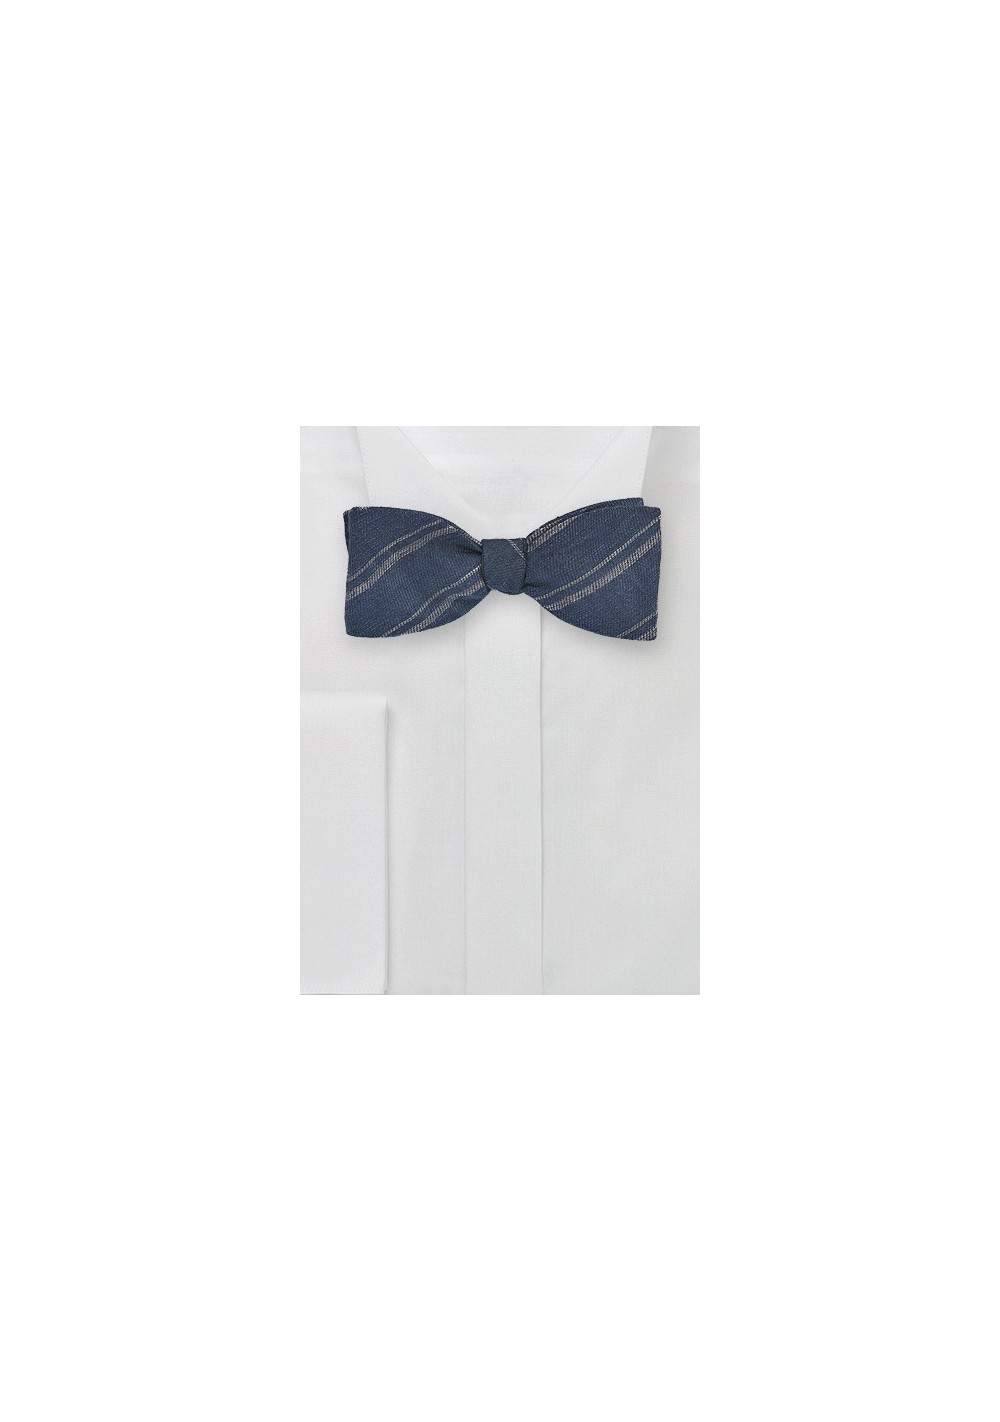 Elegant Linen Bow Tie in Navy and Gray